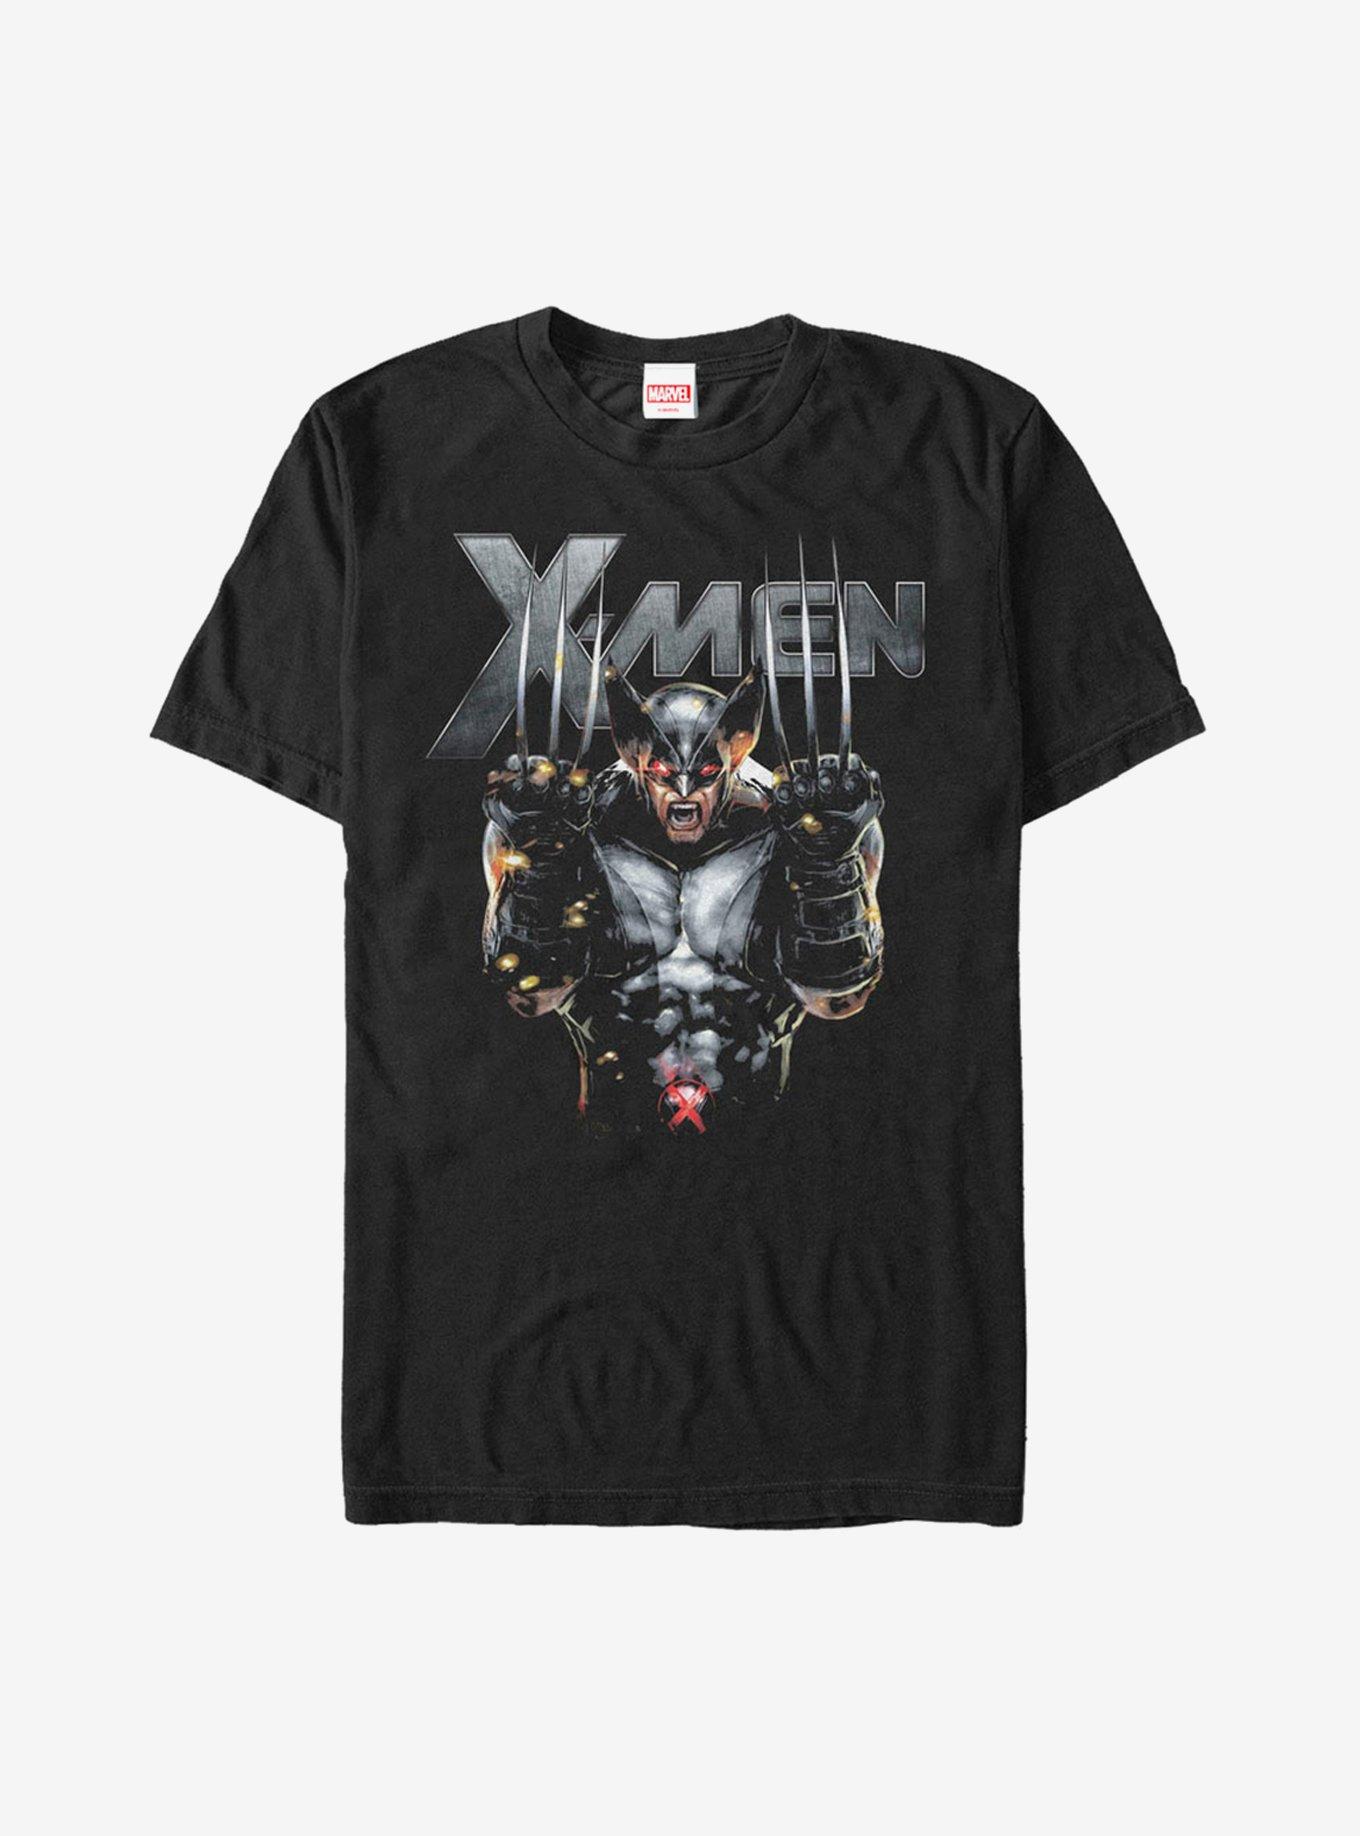 Marvel X-Men Wolverine Sharp Claws T-Shirt, BLACK, hi-res